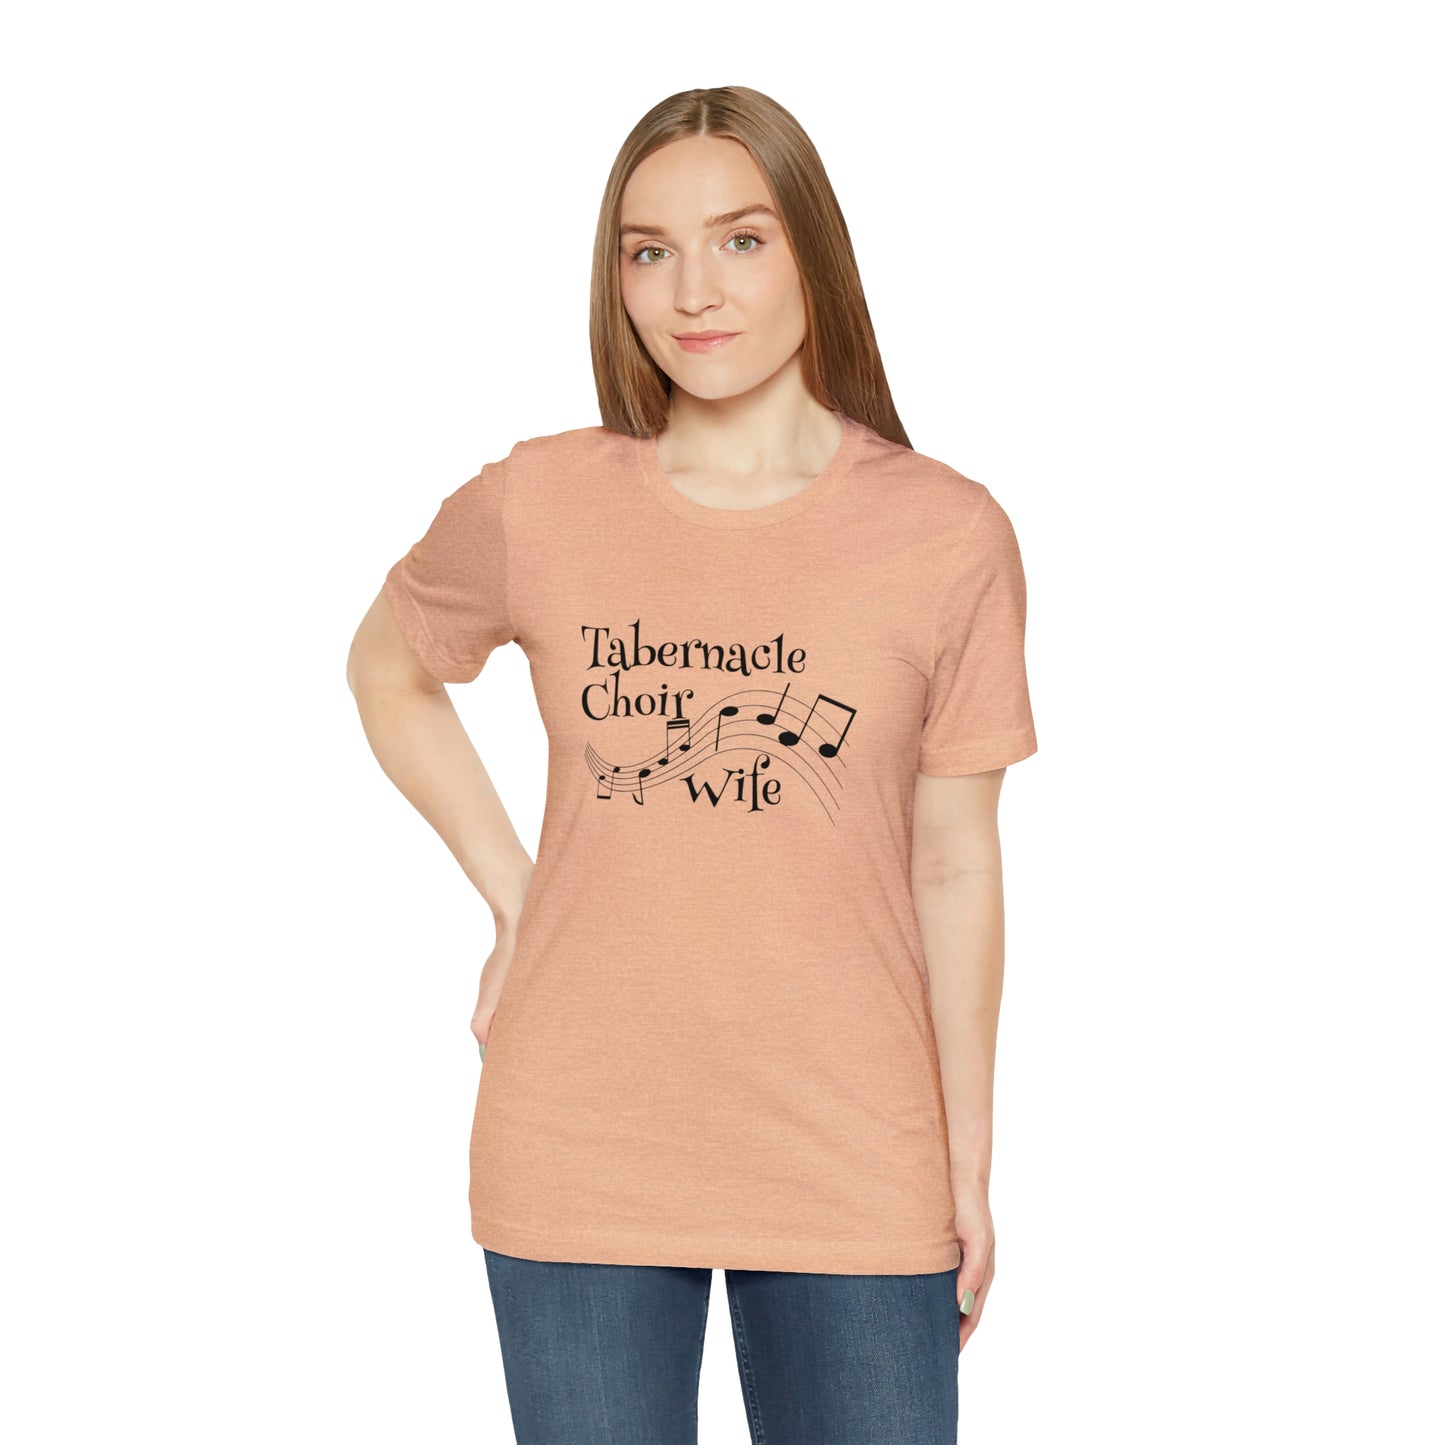 Unisex Jersey Short Sleeve Tee, Customizable Tabernacle Choir Mom and Wife, School Choir Shirt